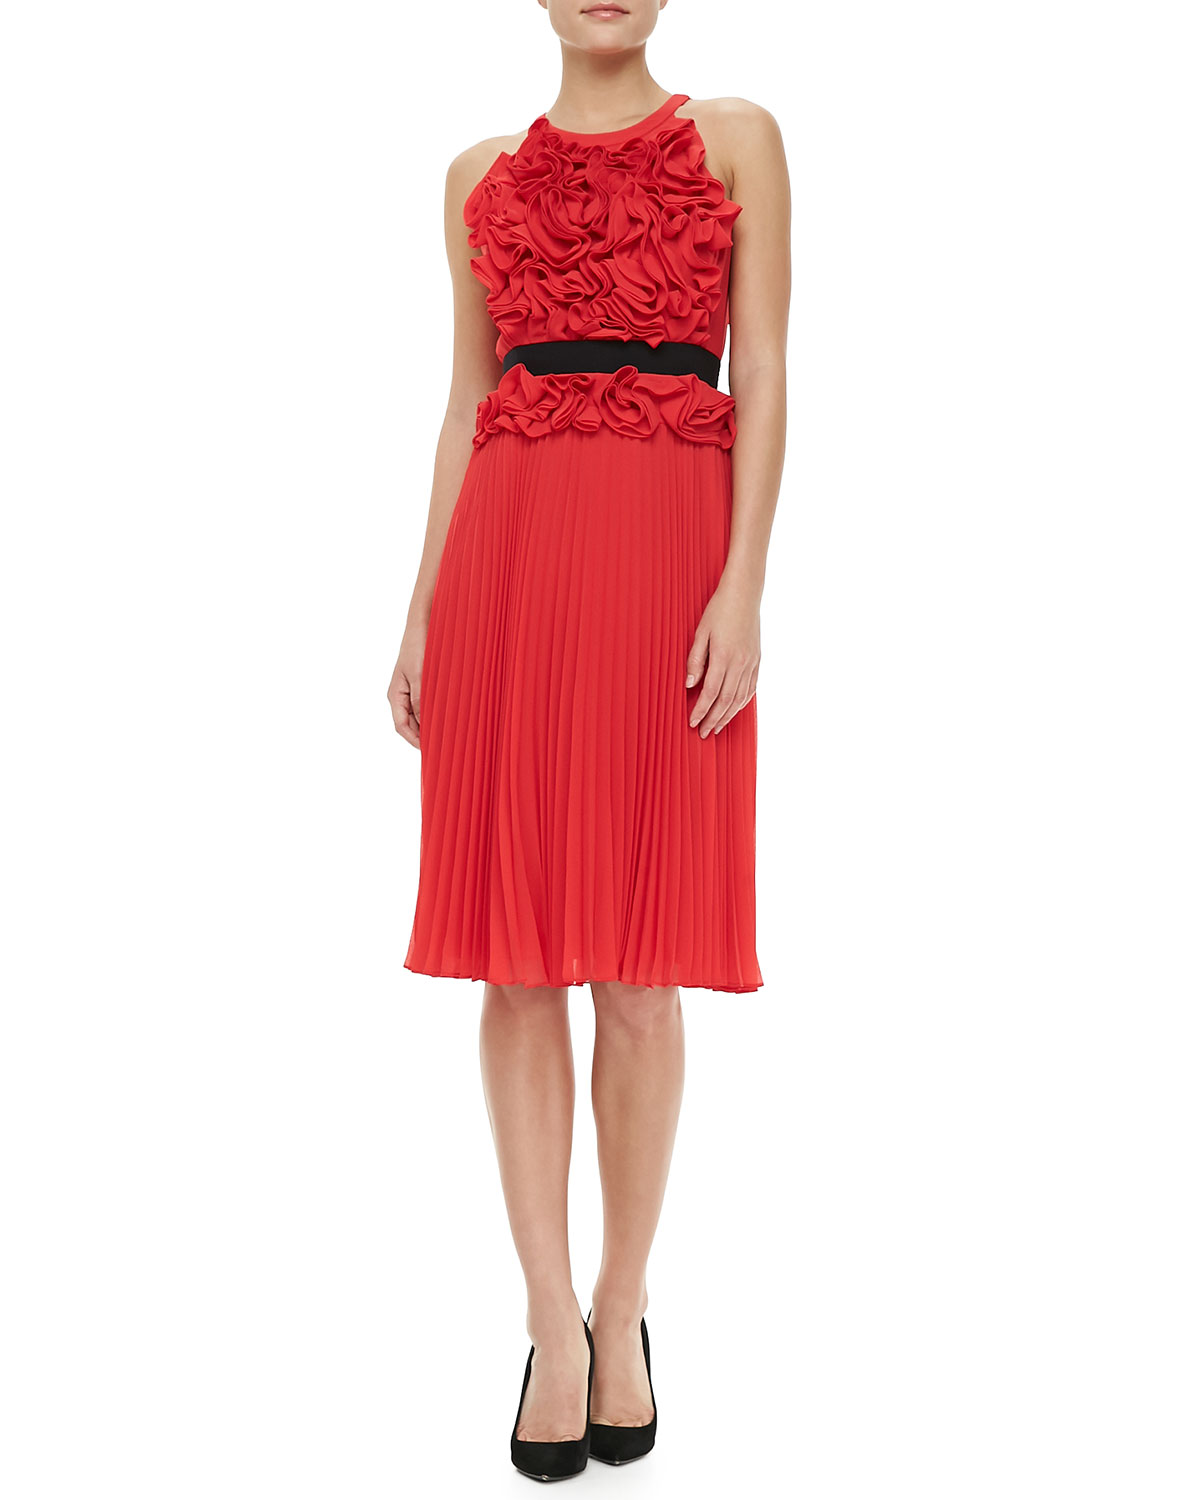 Lyst - Bcbgmaxazria Safina Ruffled Pleated Dress in Red